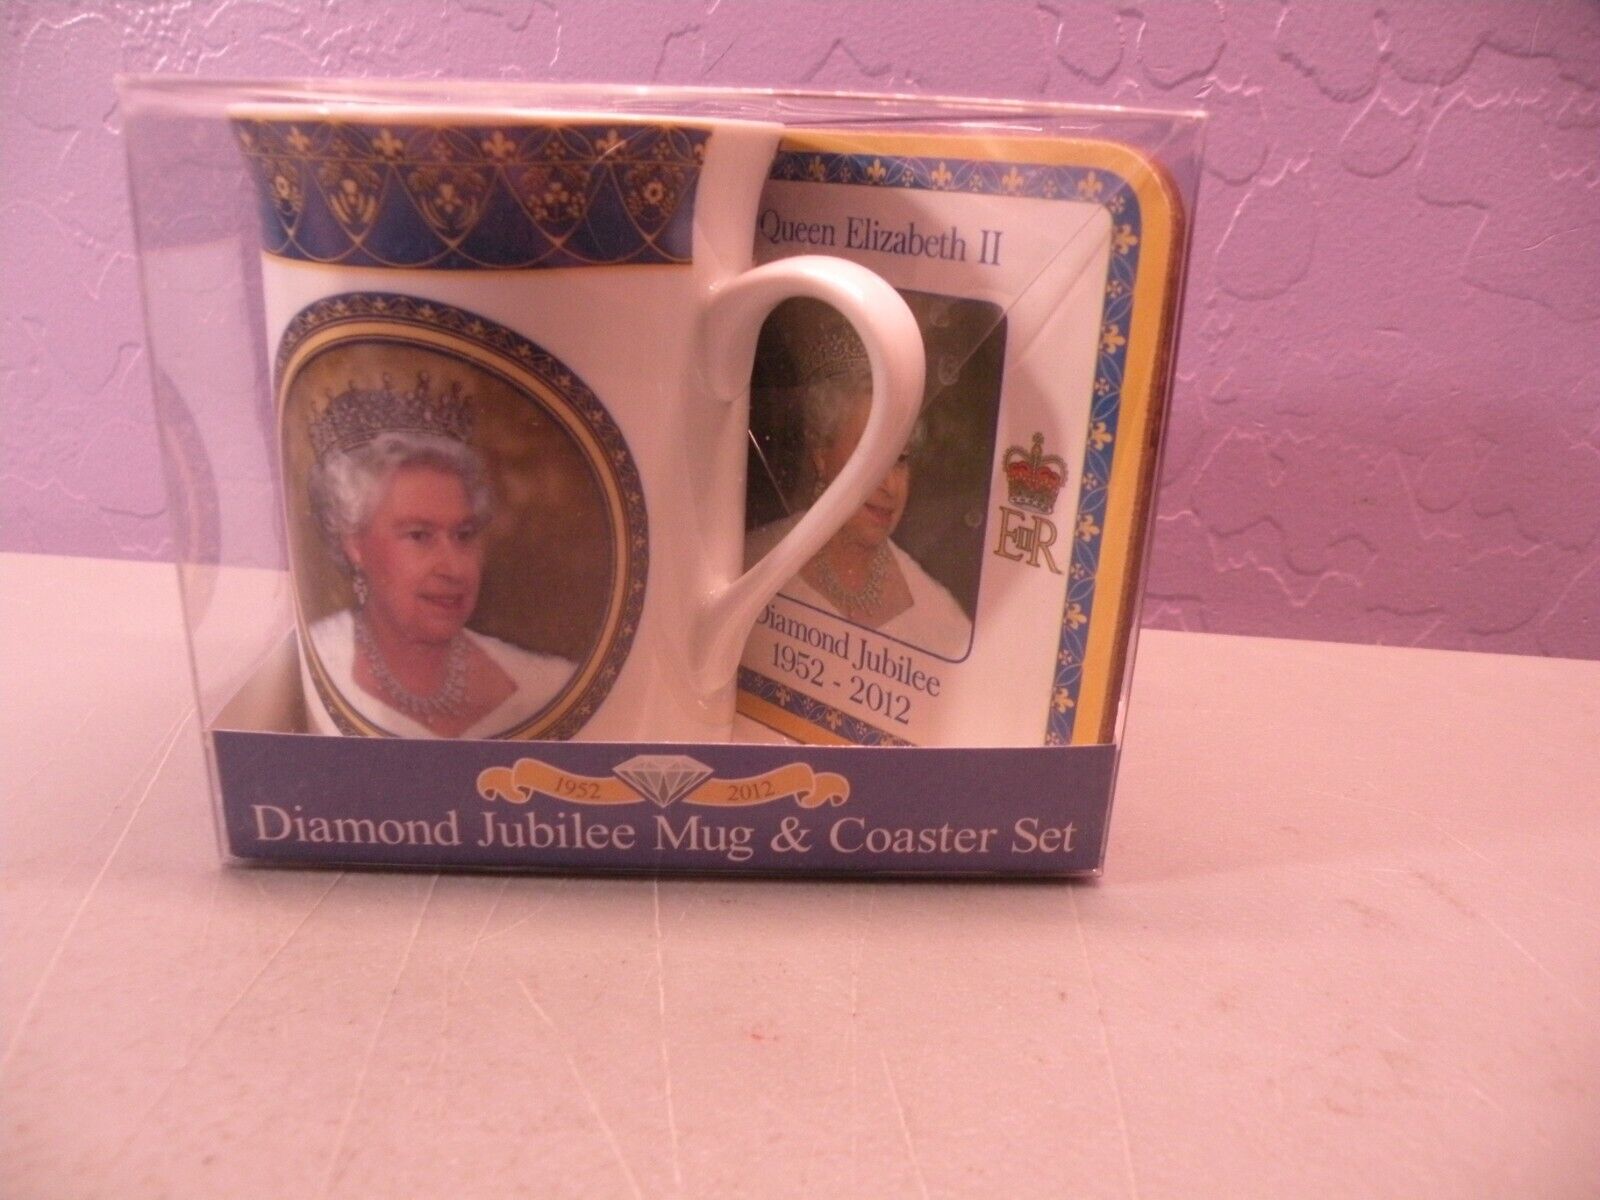 Queen Elizabeth II Diamond Jubilee Mug & Coaster Set (1952-2012) New In Orig box